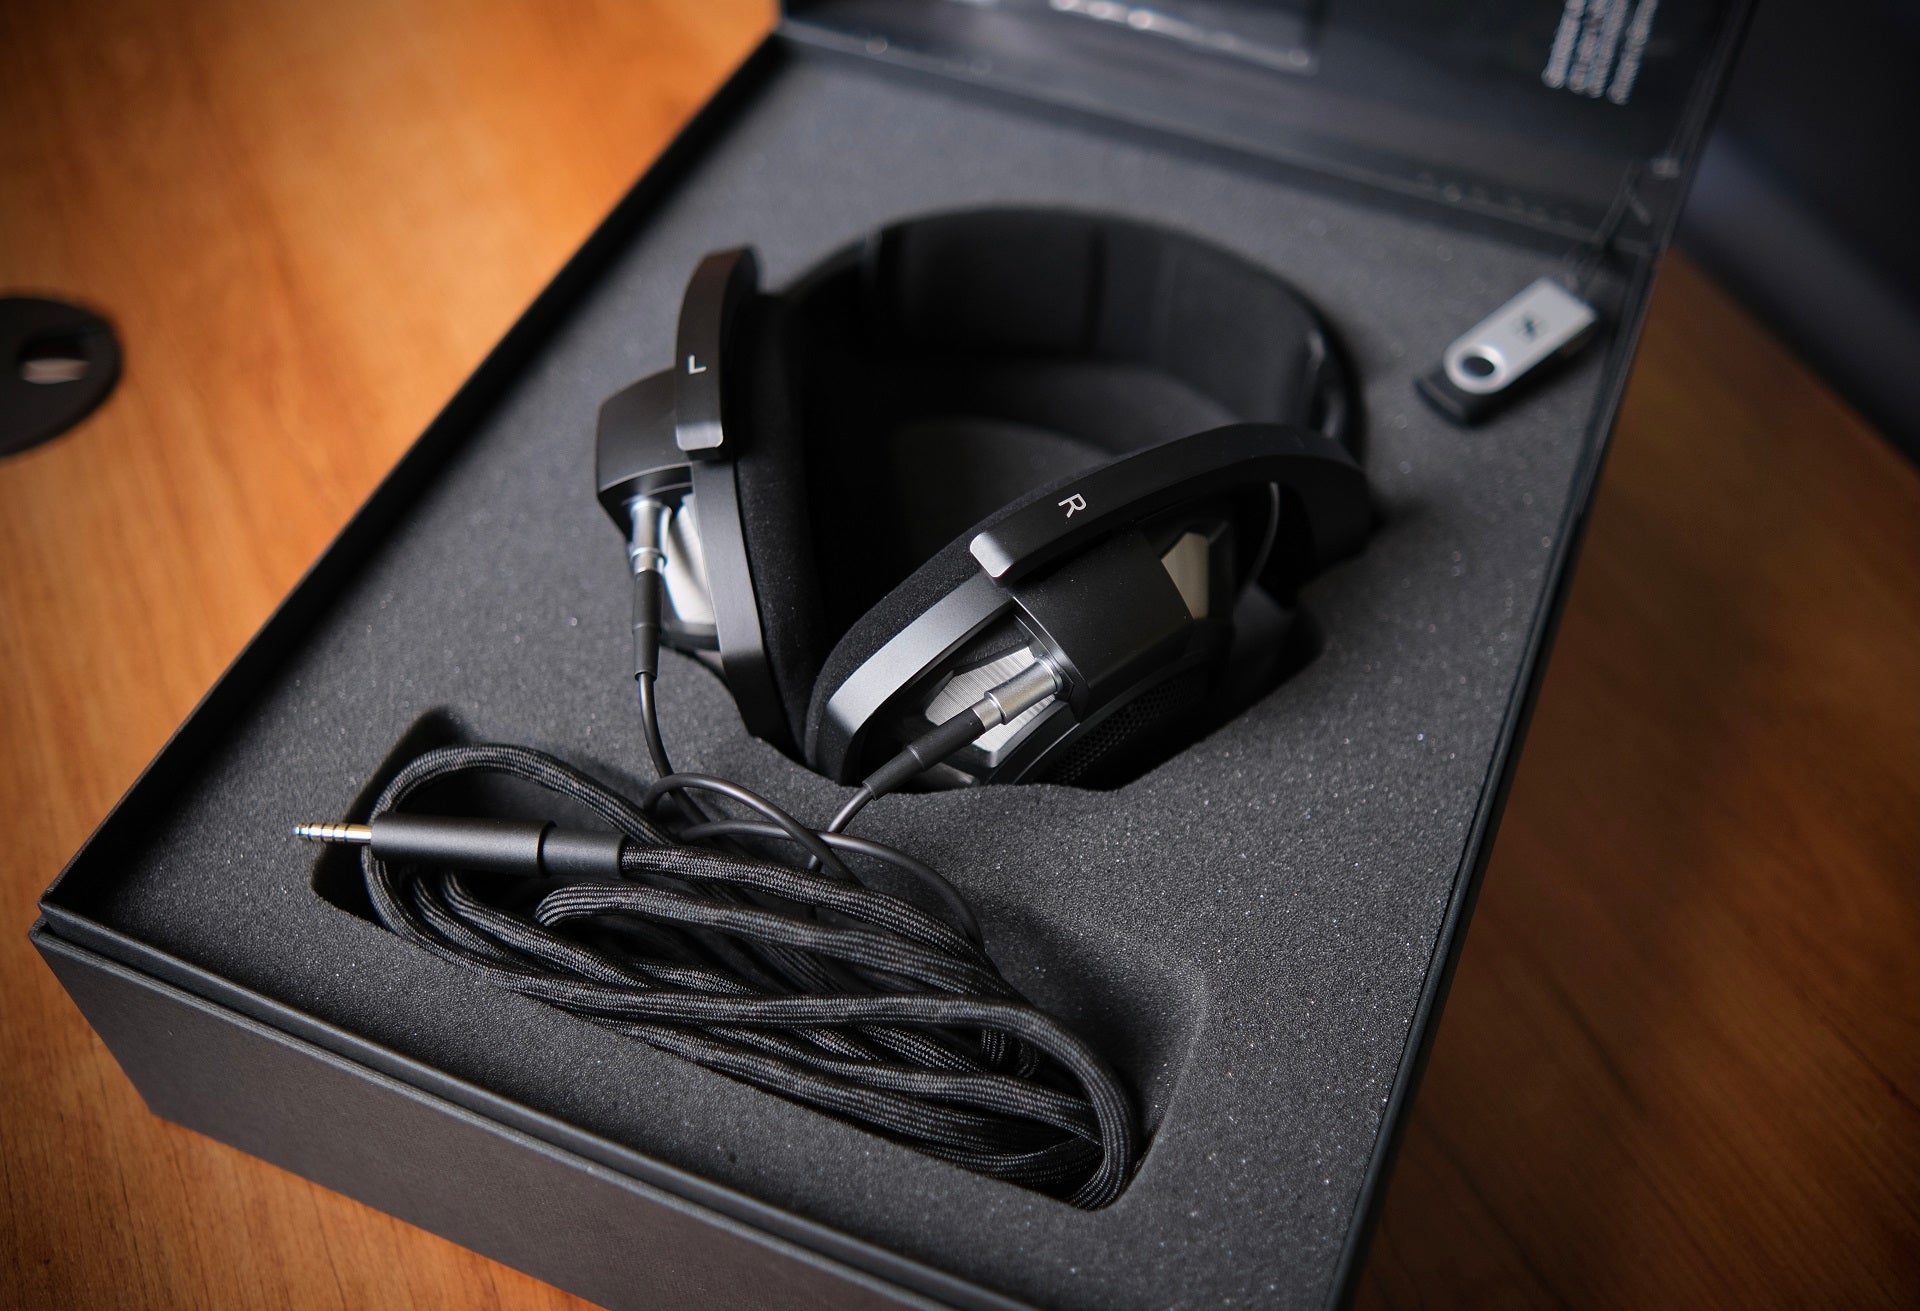 Sennheiser HD 800 S Review | Headphones.com